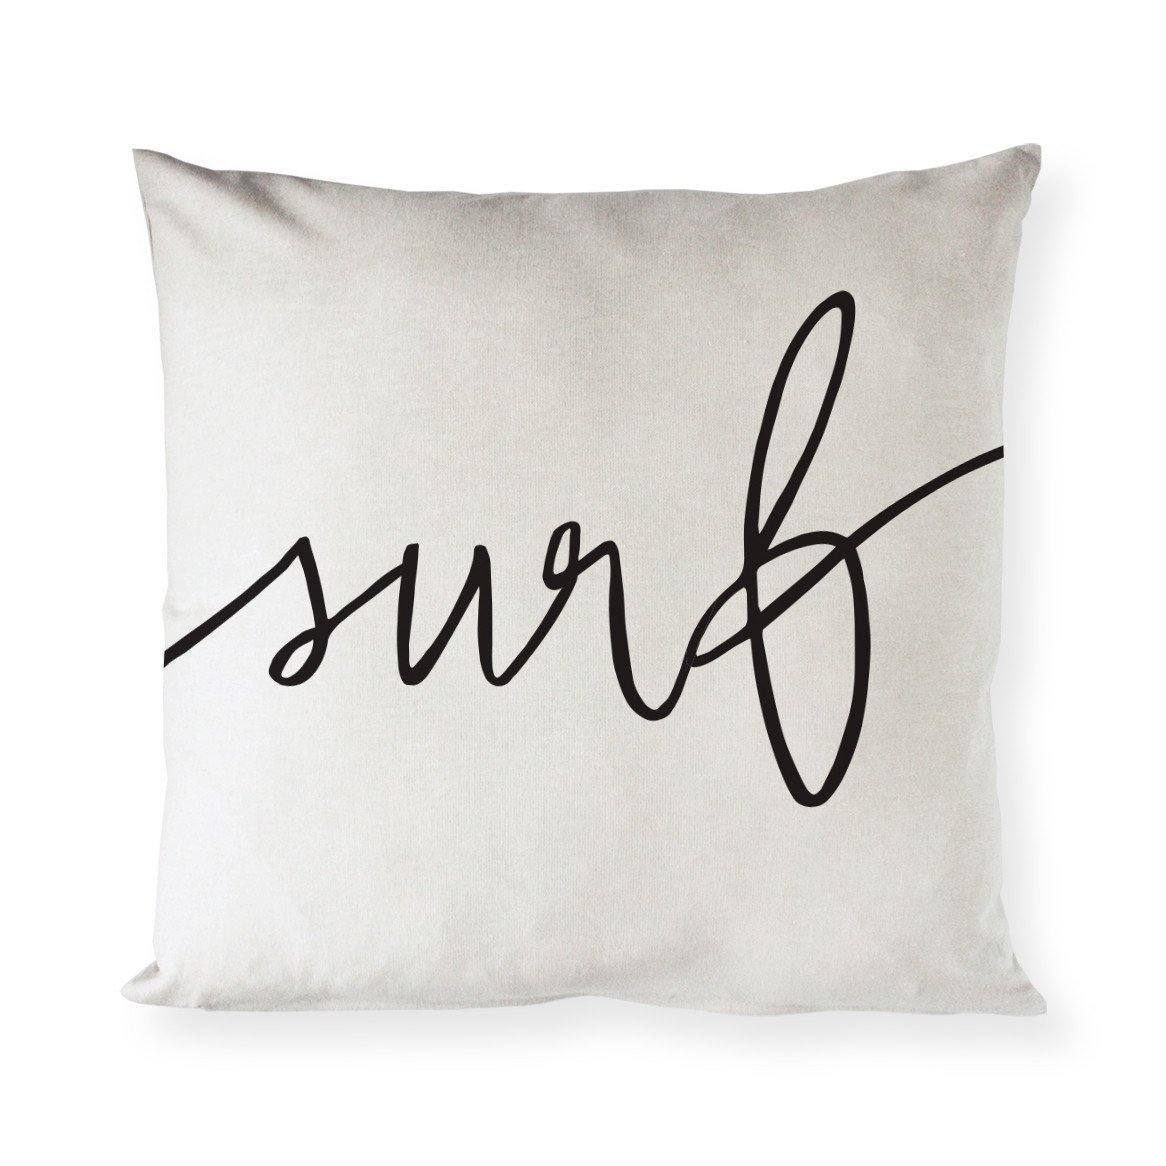 Surf Pillow Cover - The Wild Calla 